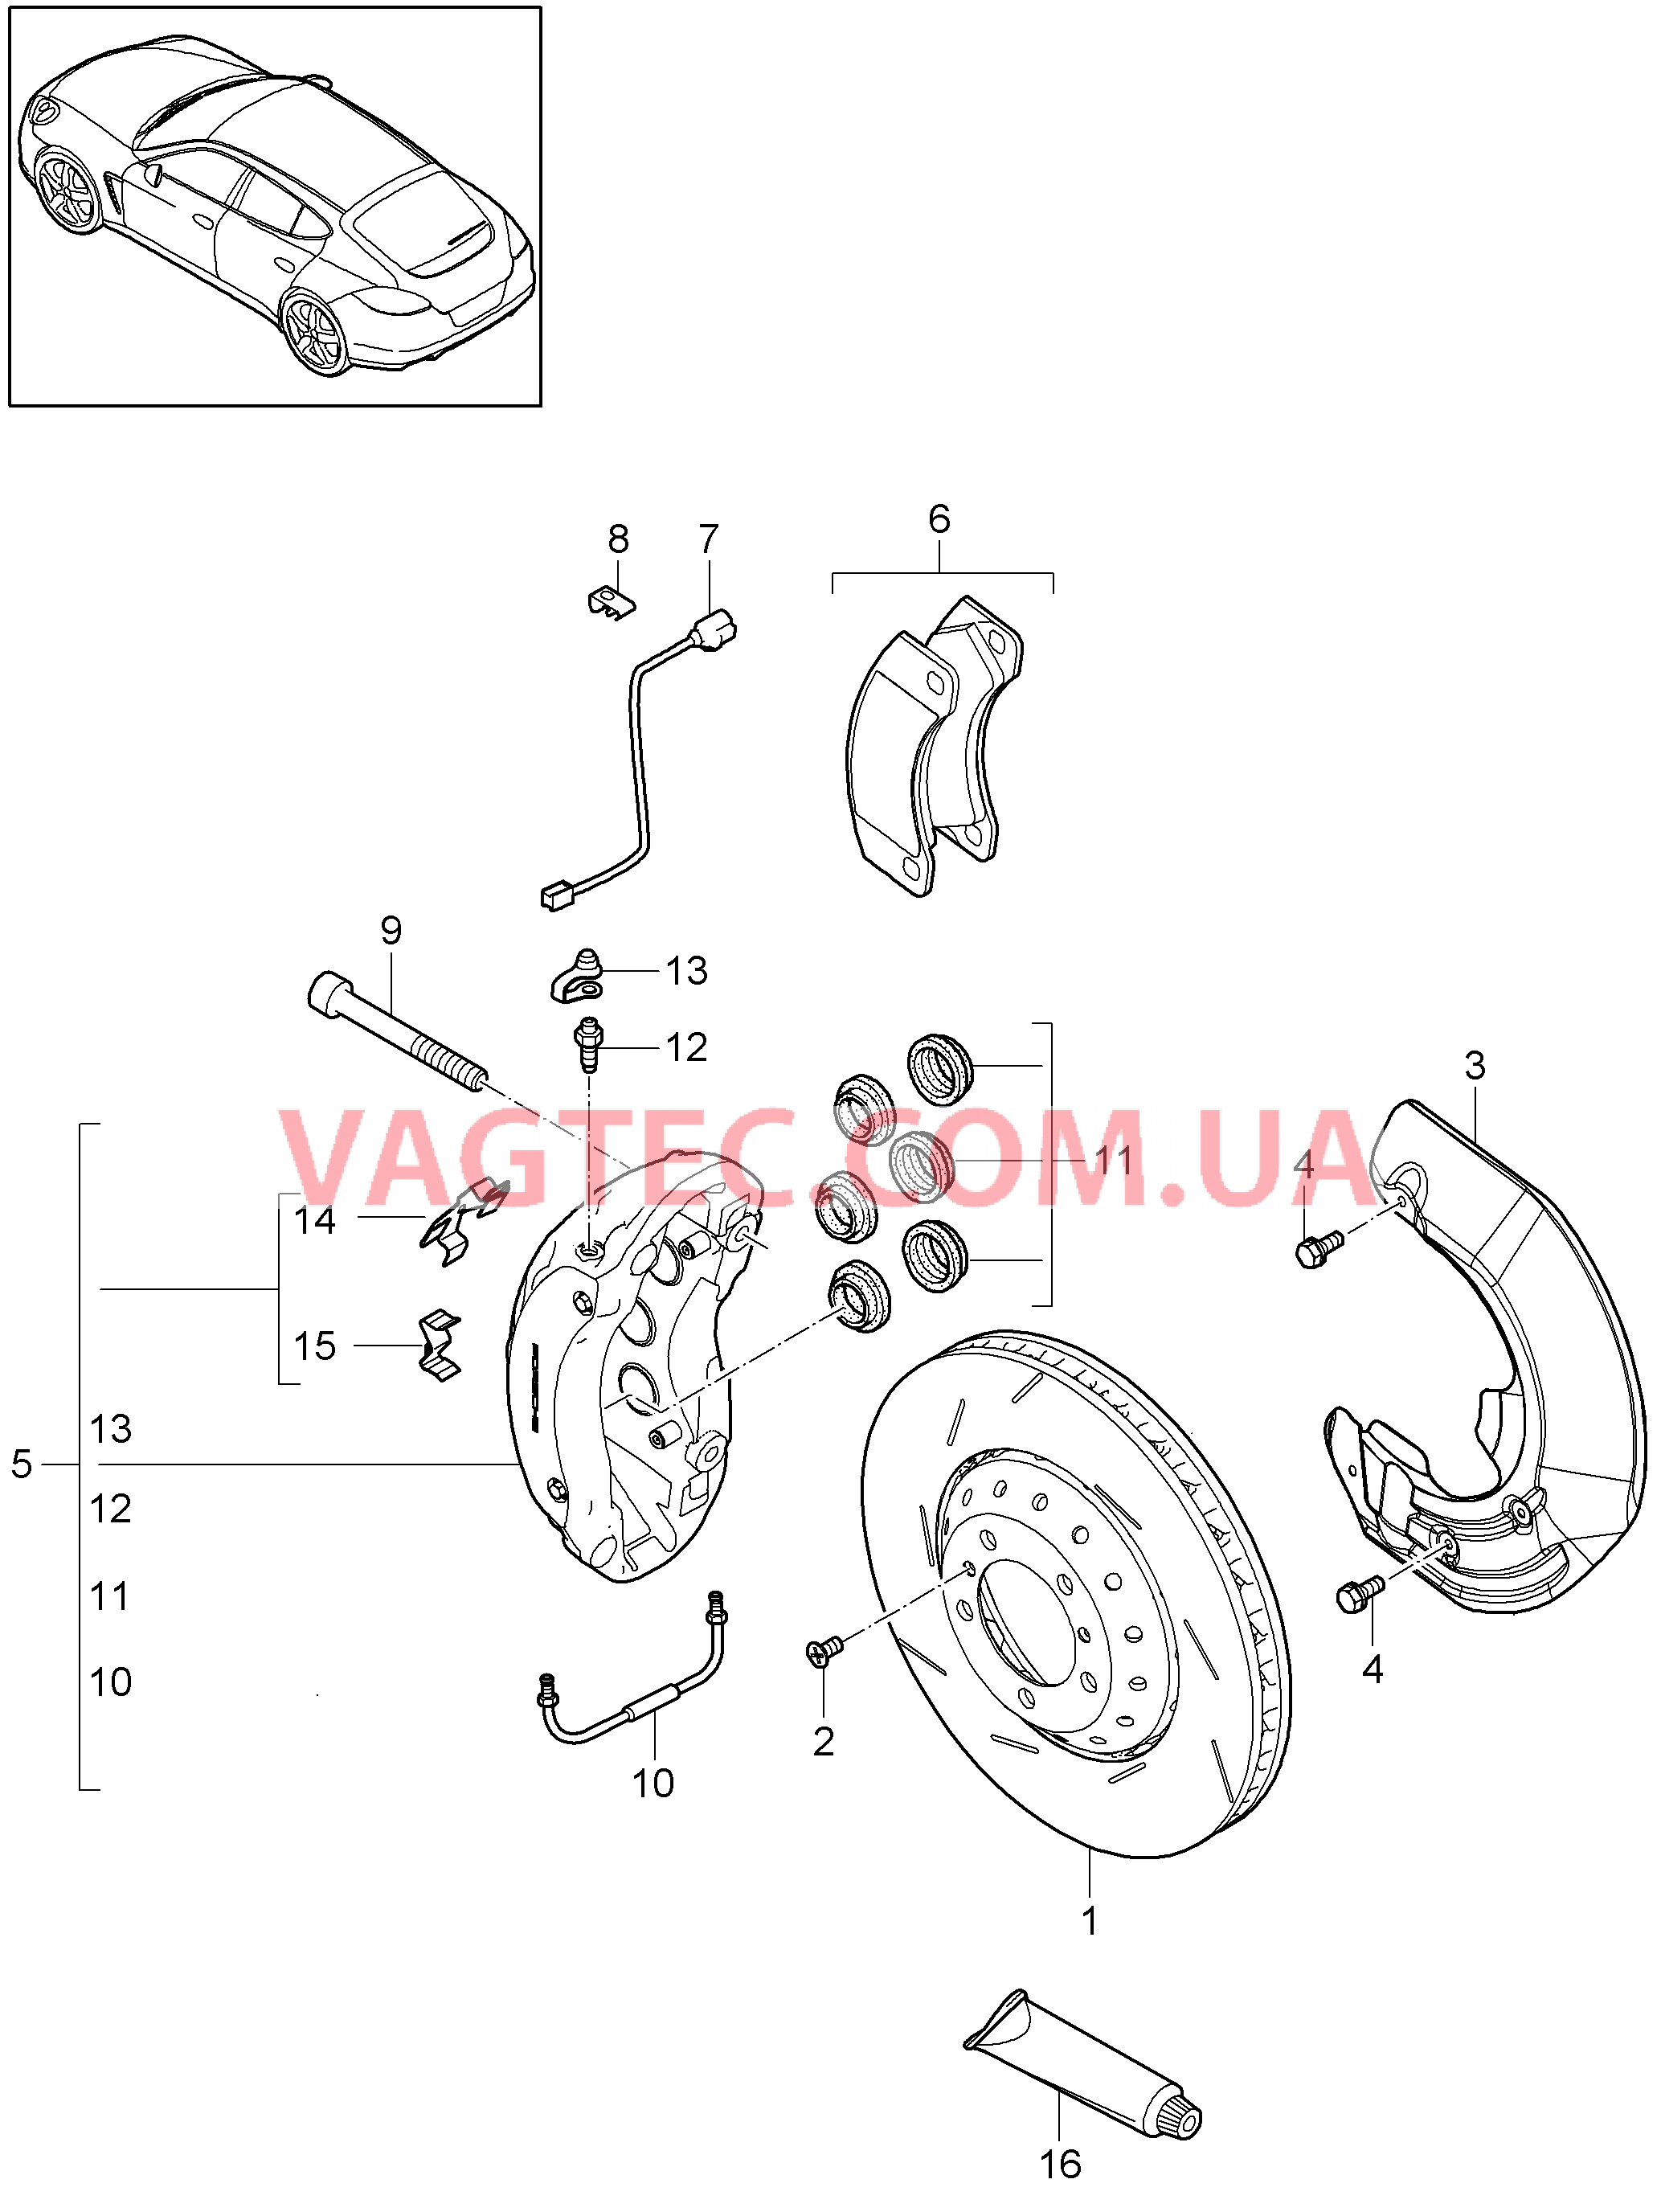 602-010 Дисковой тормоз, Передняя ось
						
						MCR.CB/CC, M46.20/40 для PORSCHE Panamera 2010-2016USA